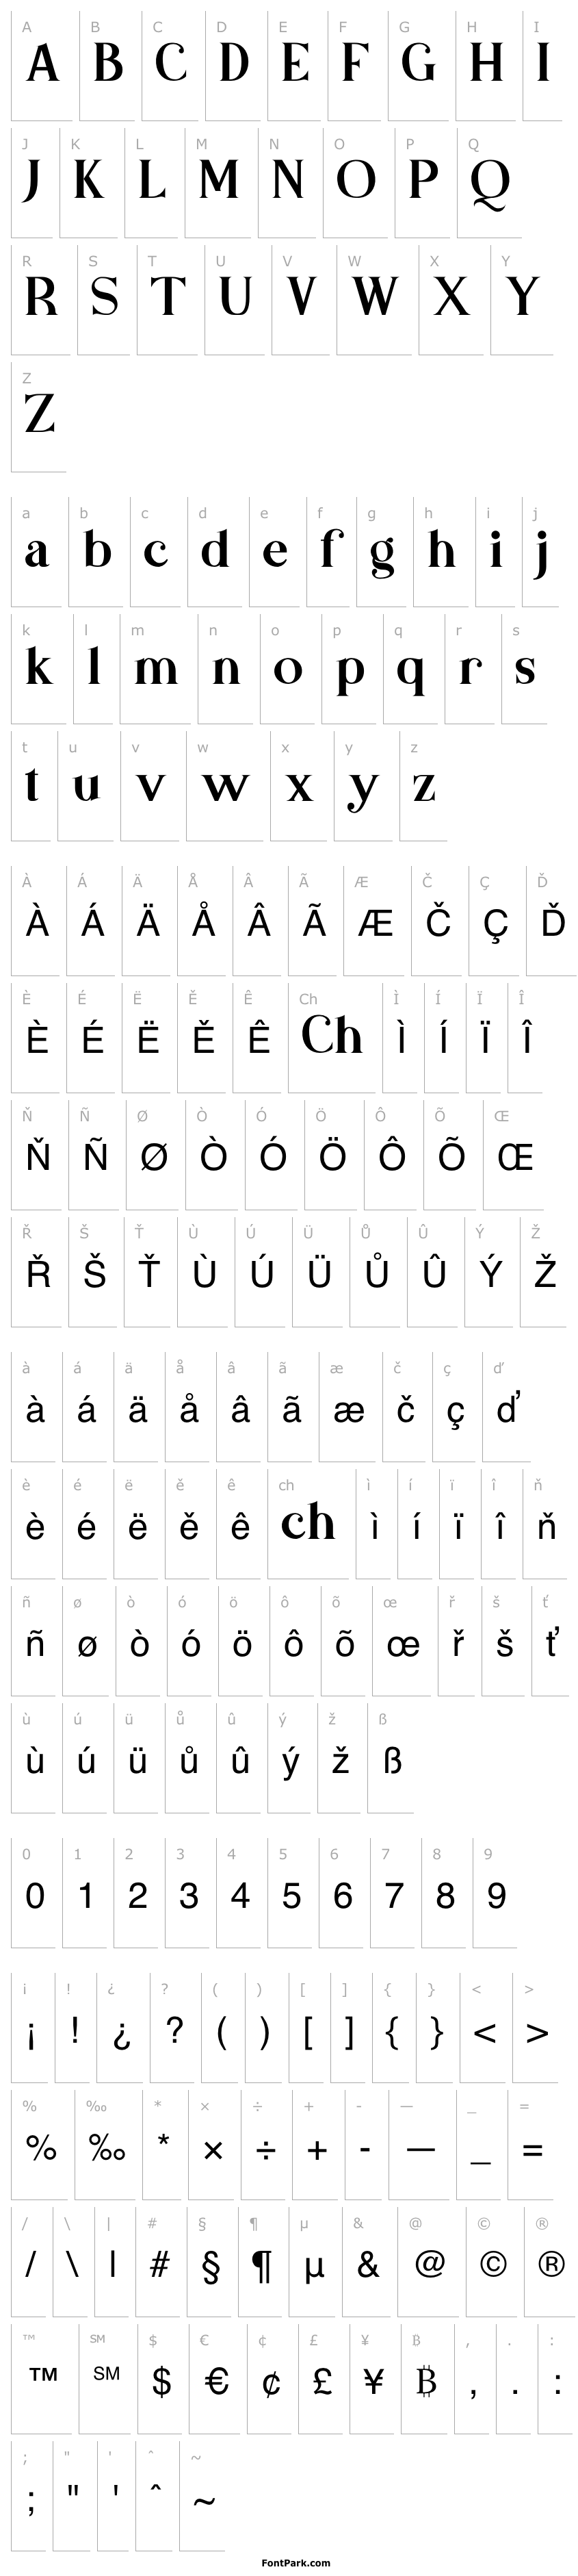 Overview Basics Serif Free Regular